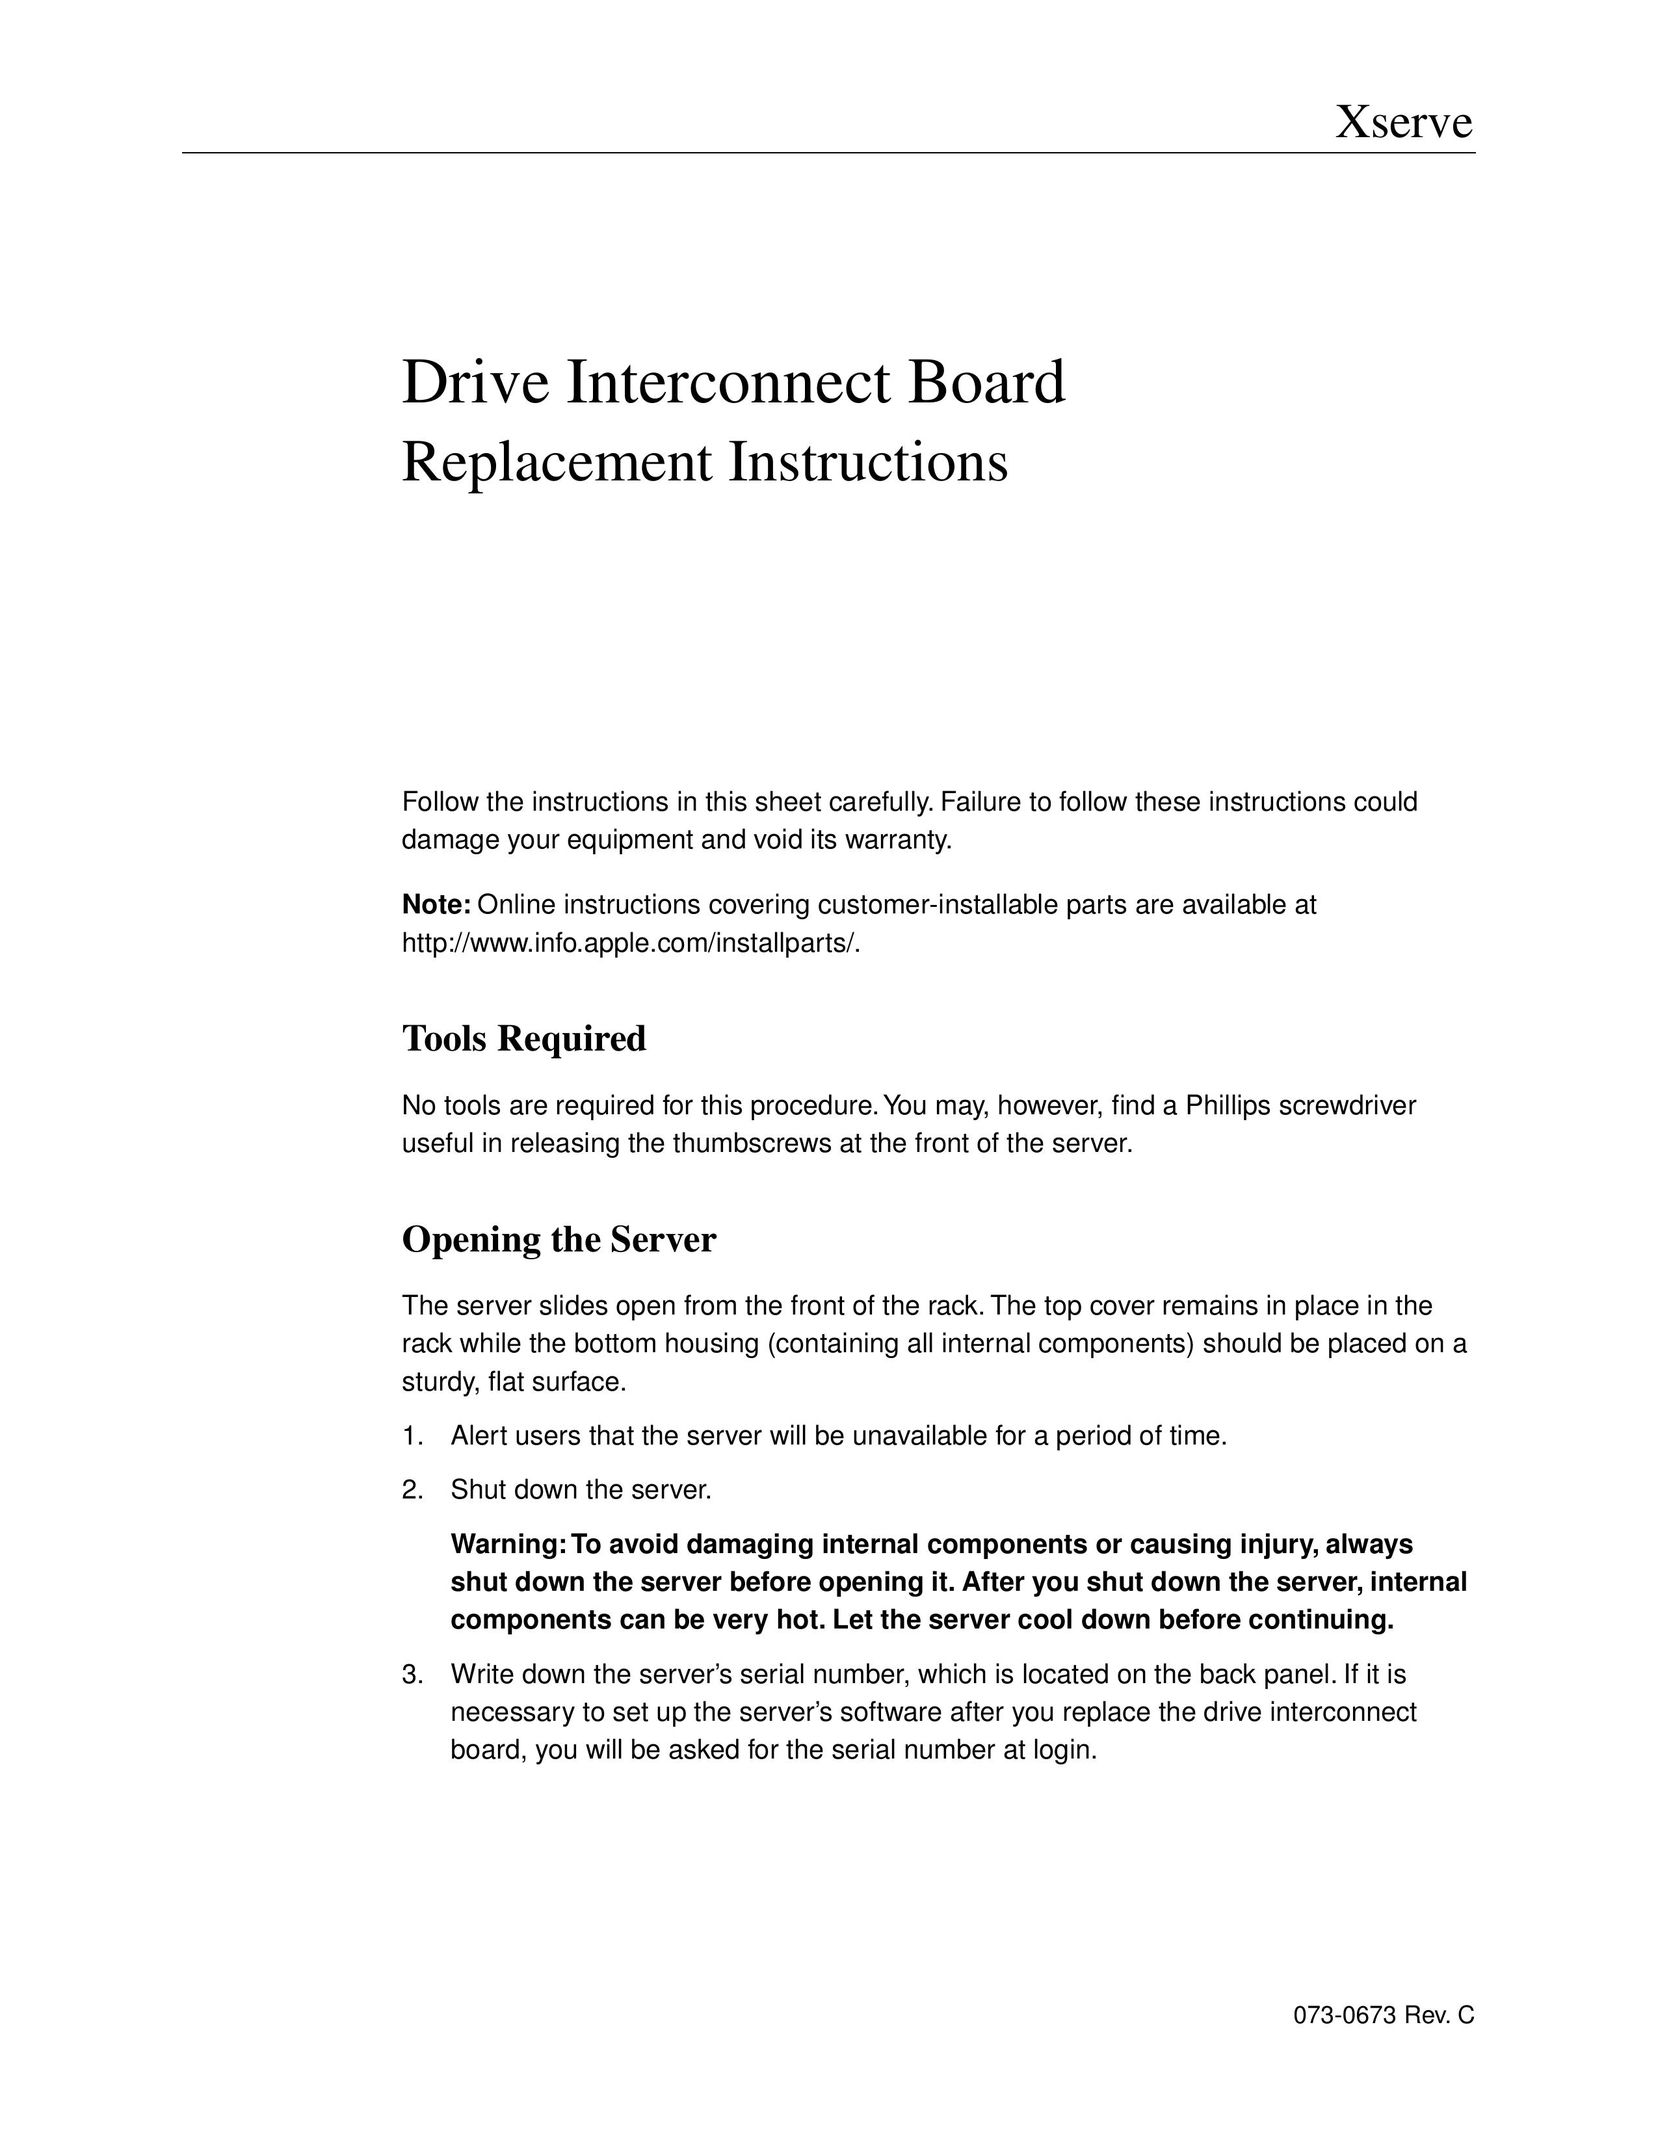 Apple Drive Interconnect Board Computer Hardware User Manual